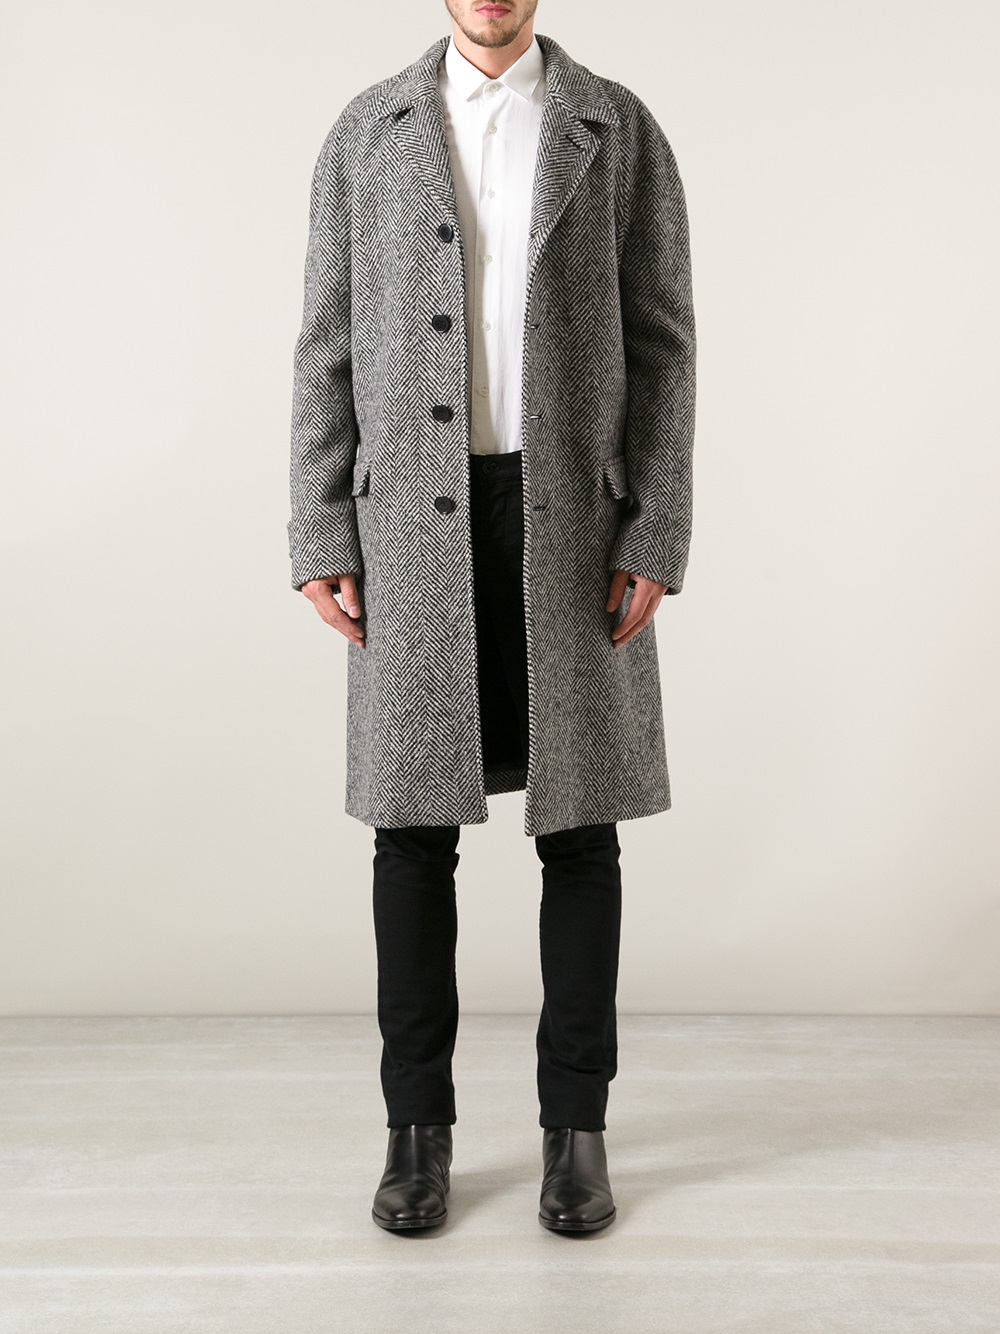 Lyst - Saint Laurent Herringbone Boxy Overcoat in Gray for Men